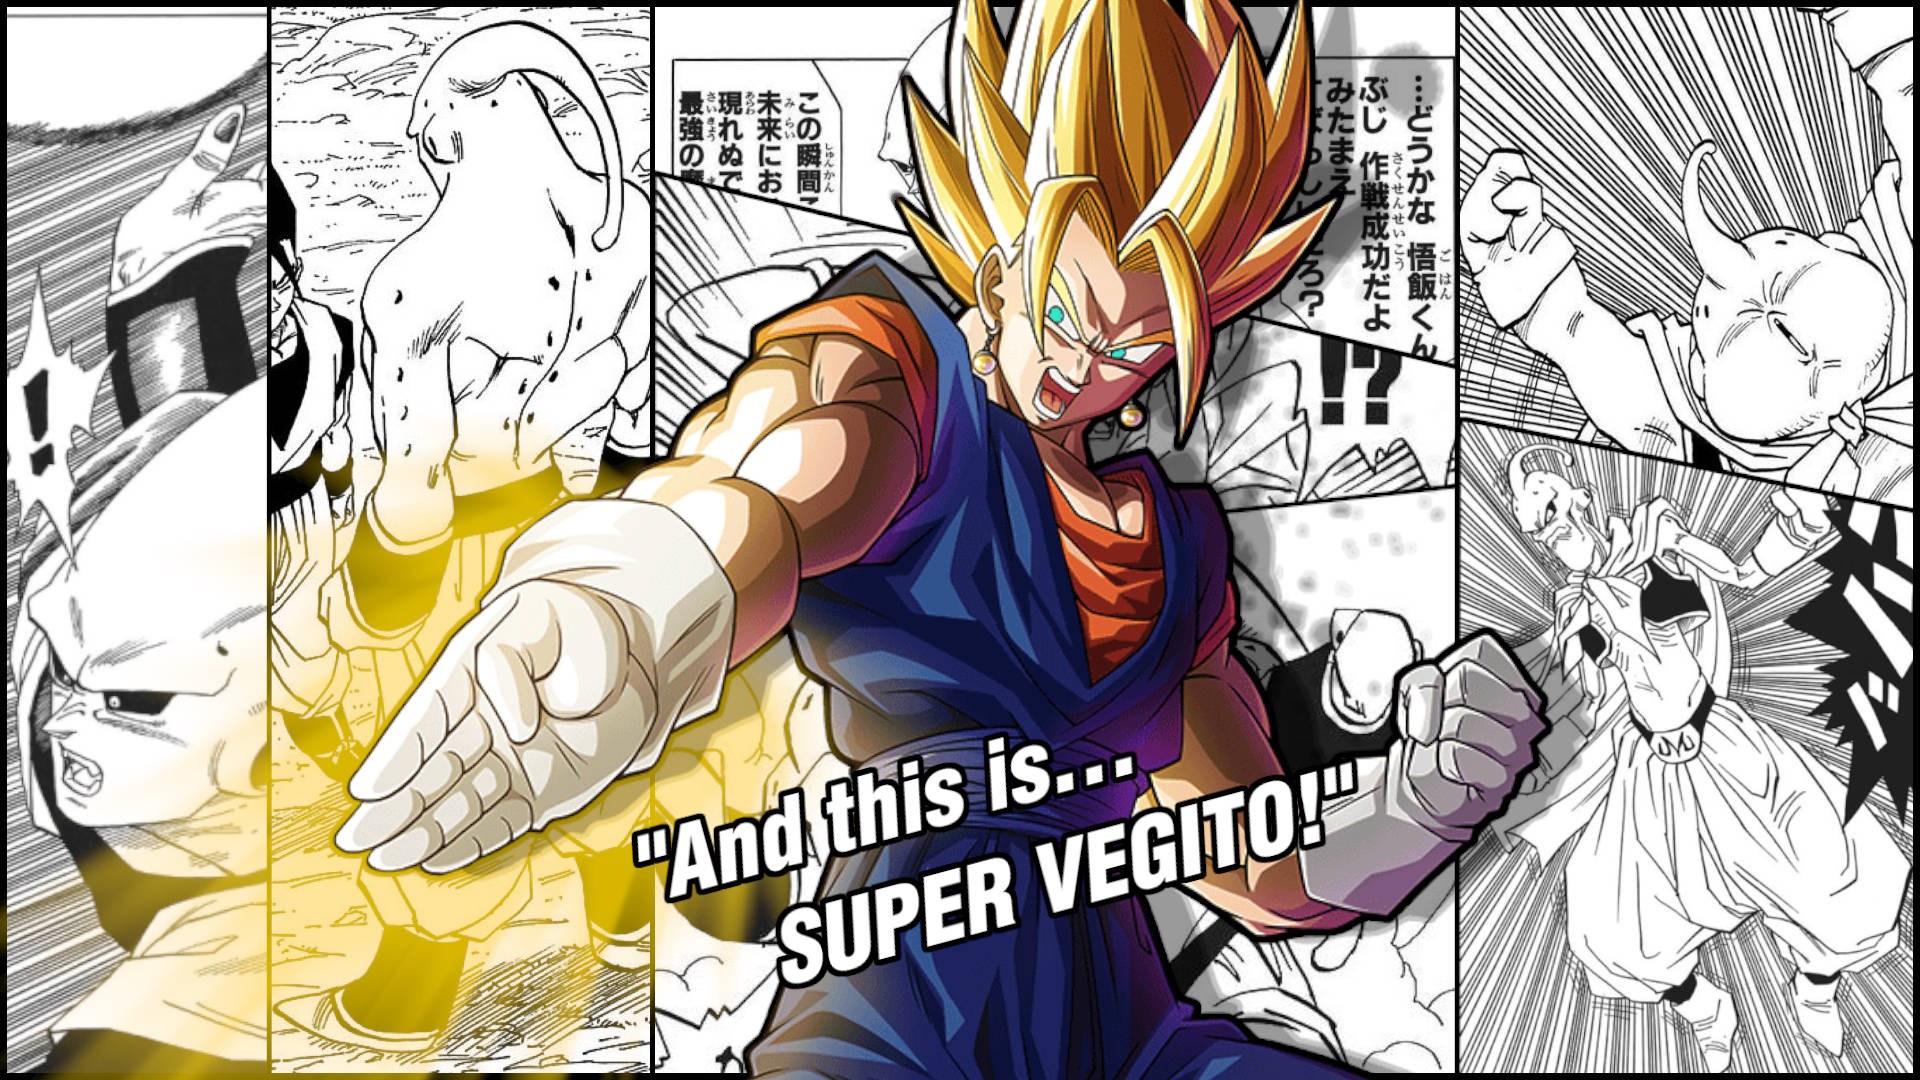 Super Vegito Manga Panel Background